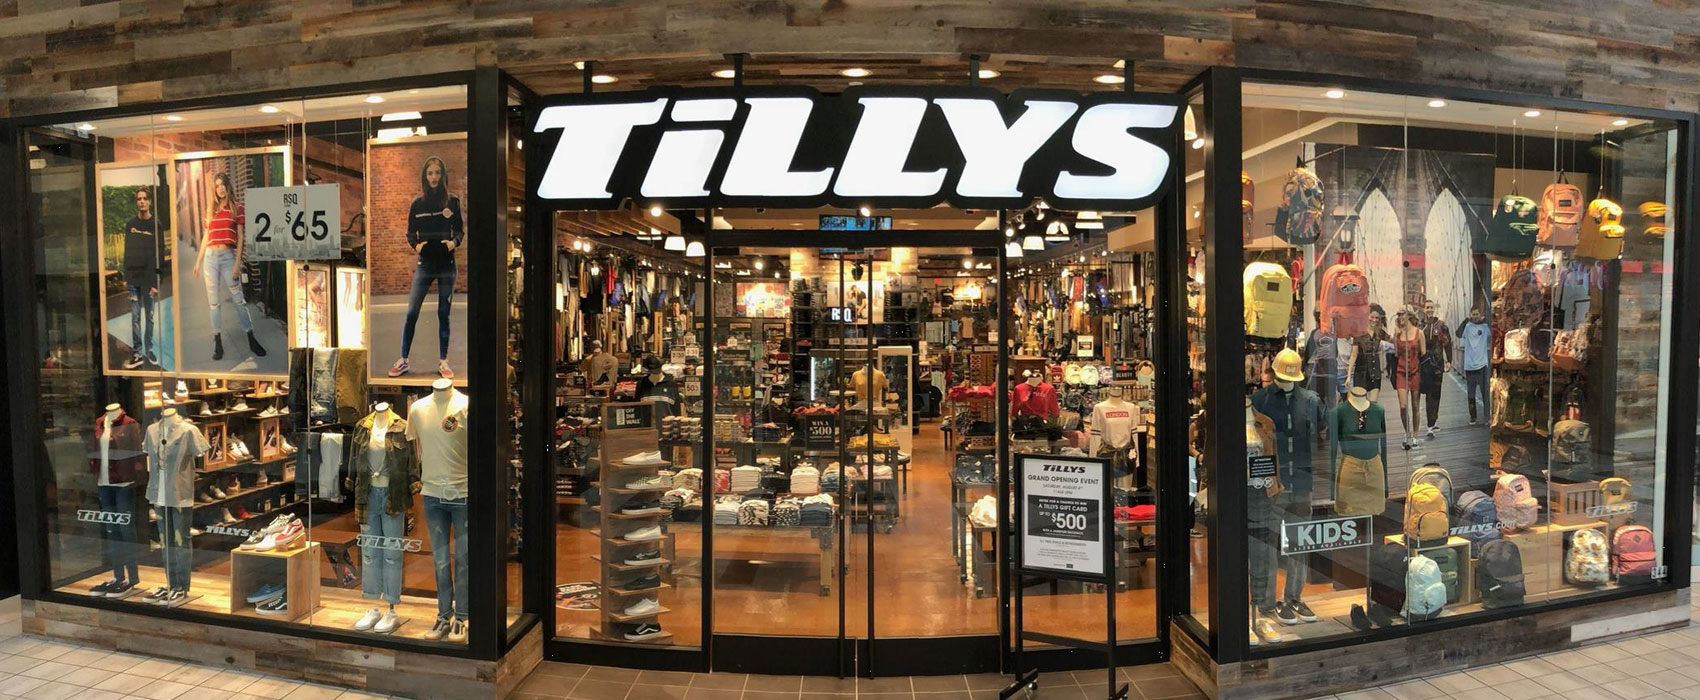 Corporate, Retail & Distribution Center Job Openings | Tillys